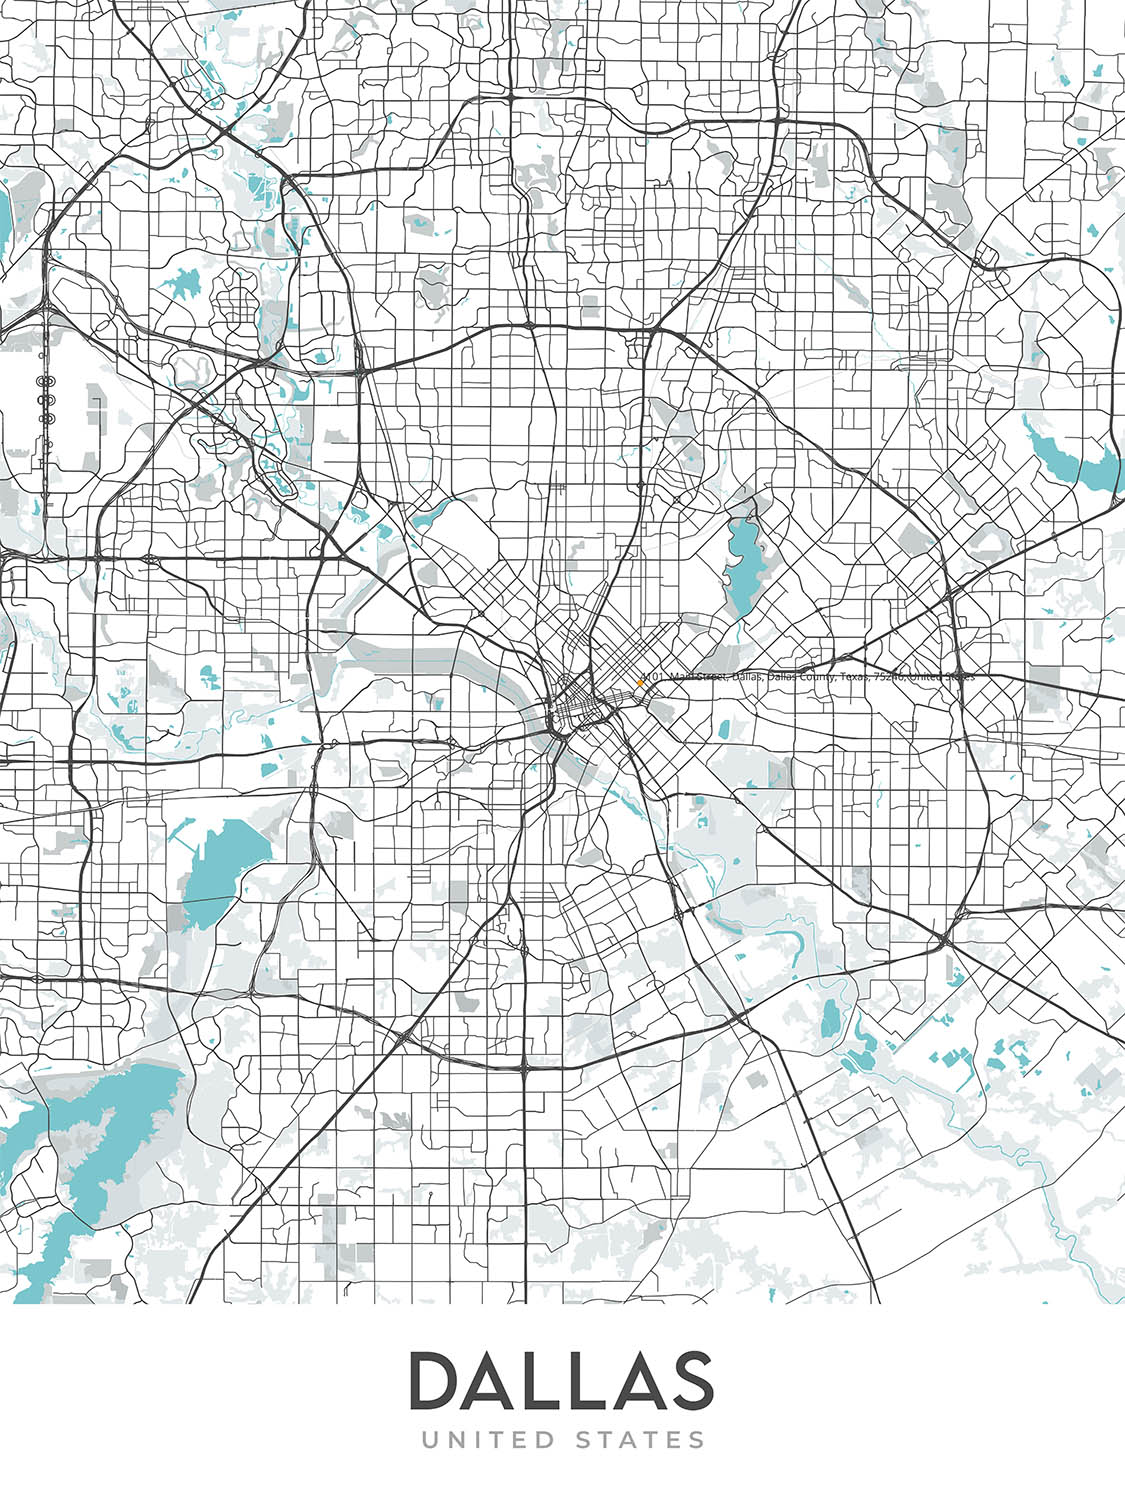 Plan de la ville moderne de Dallas, Texas : Uptown, Downtown, Deep Ellum, Dallas Cowboys Stadium, Dallas Arboretum